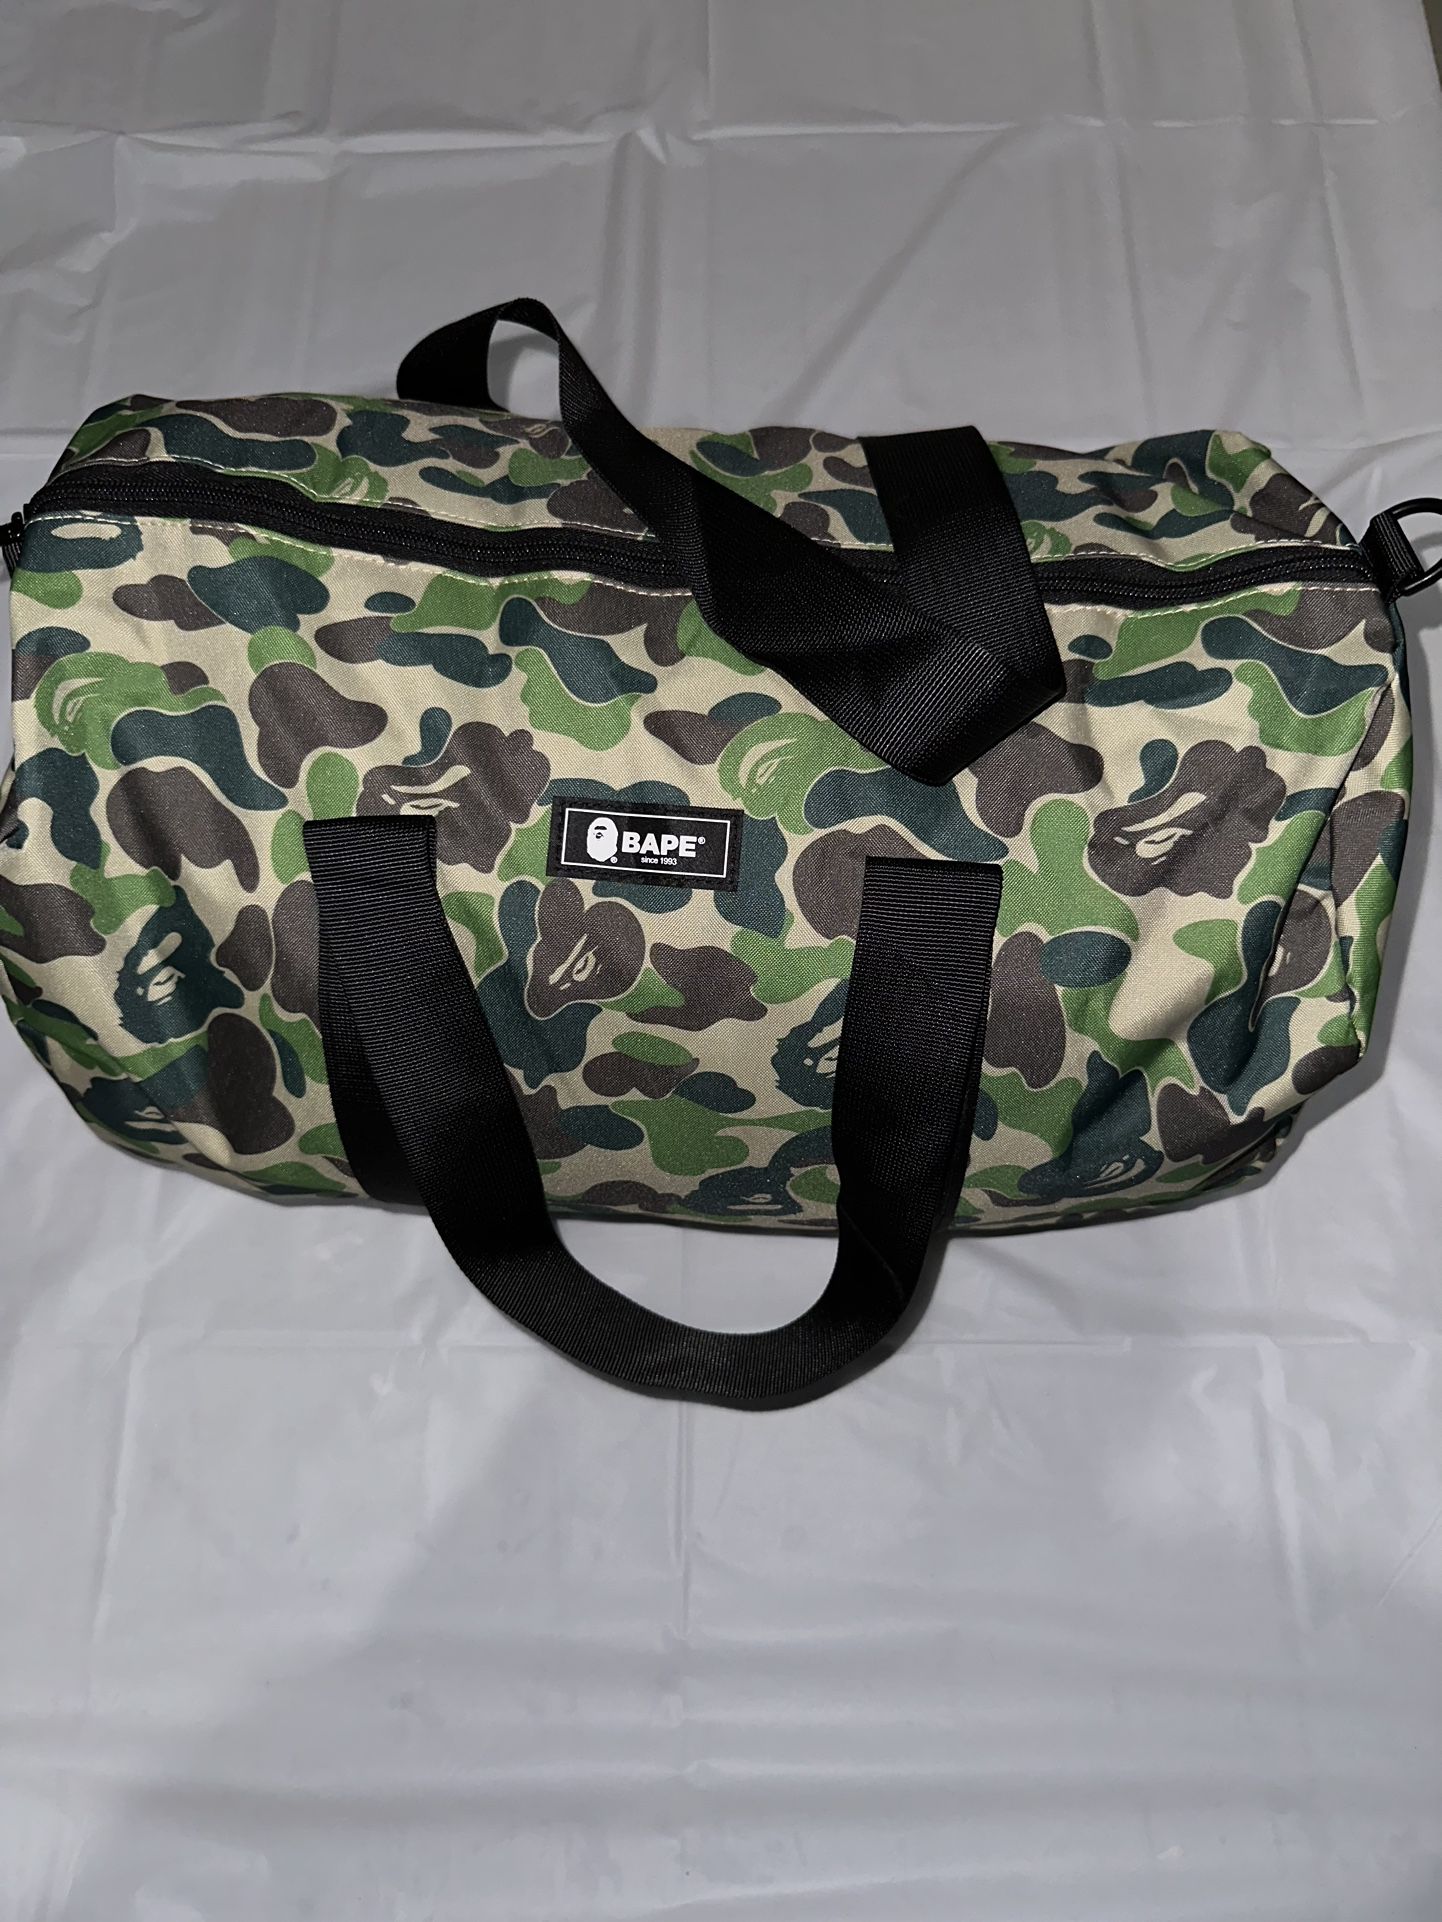 bape Duffle Bag for Sale by Sheilatracy